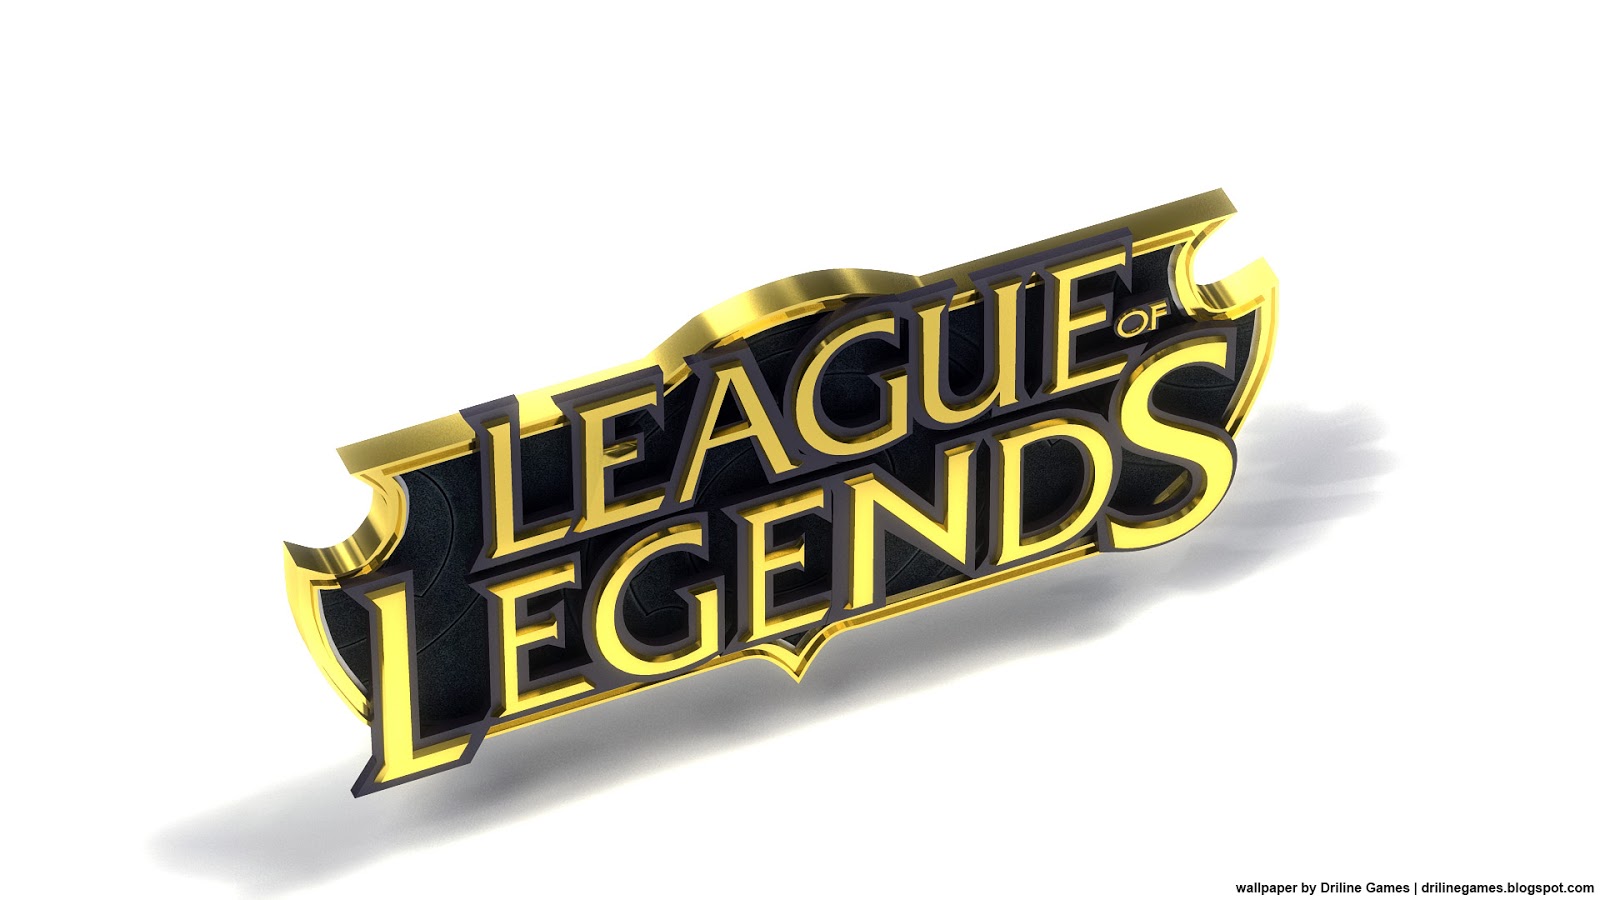 League of Legends logo WALLPAPER | Driline Games